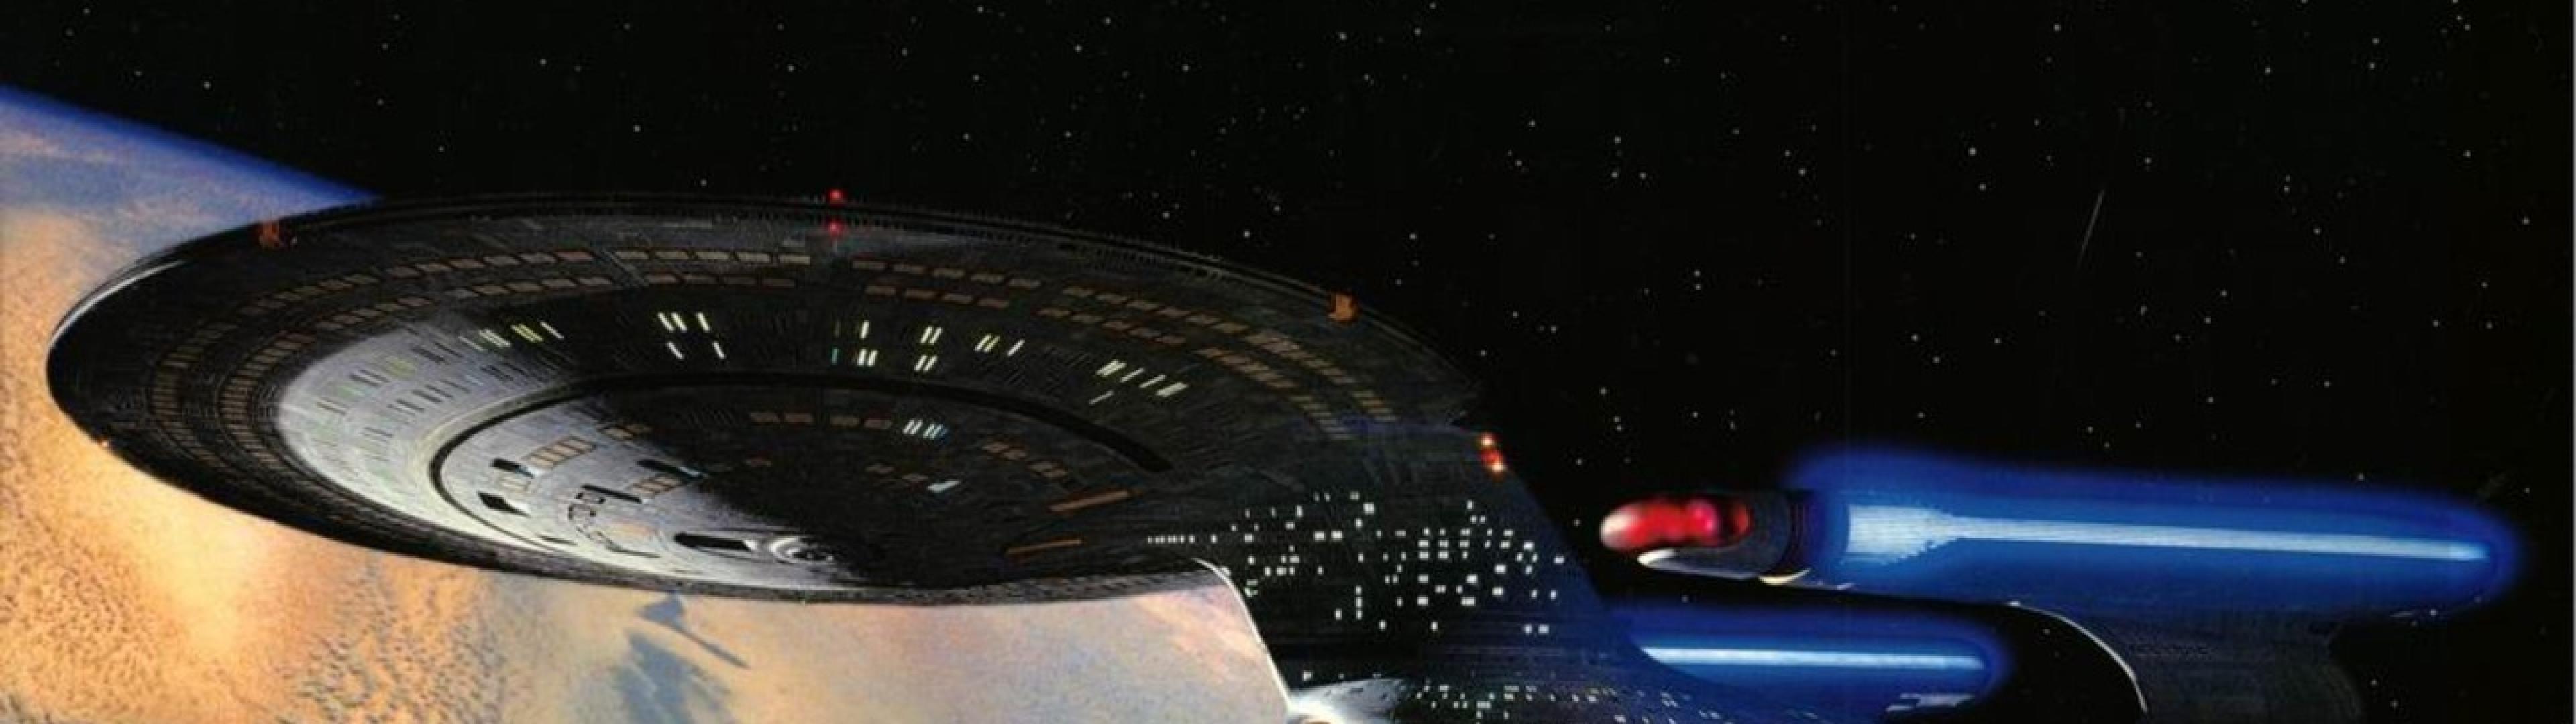 Star Trek Uss Enterprise Ultra Or Dual High Definition